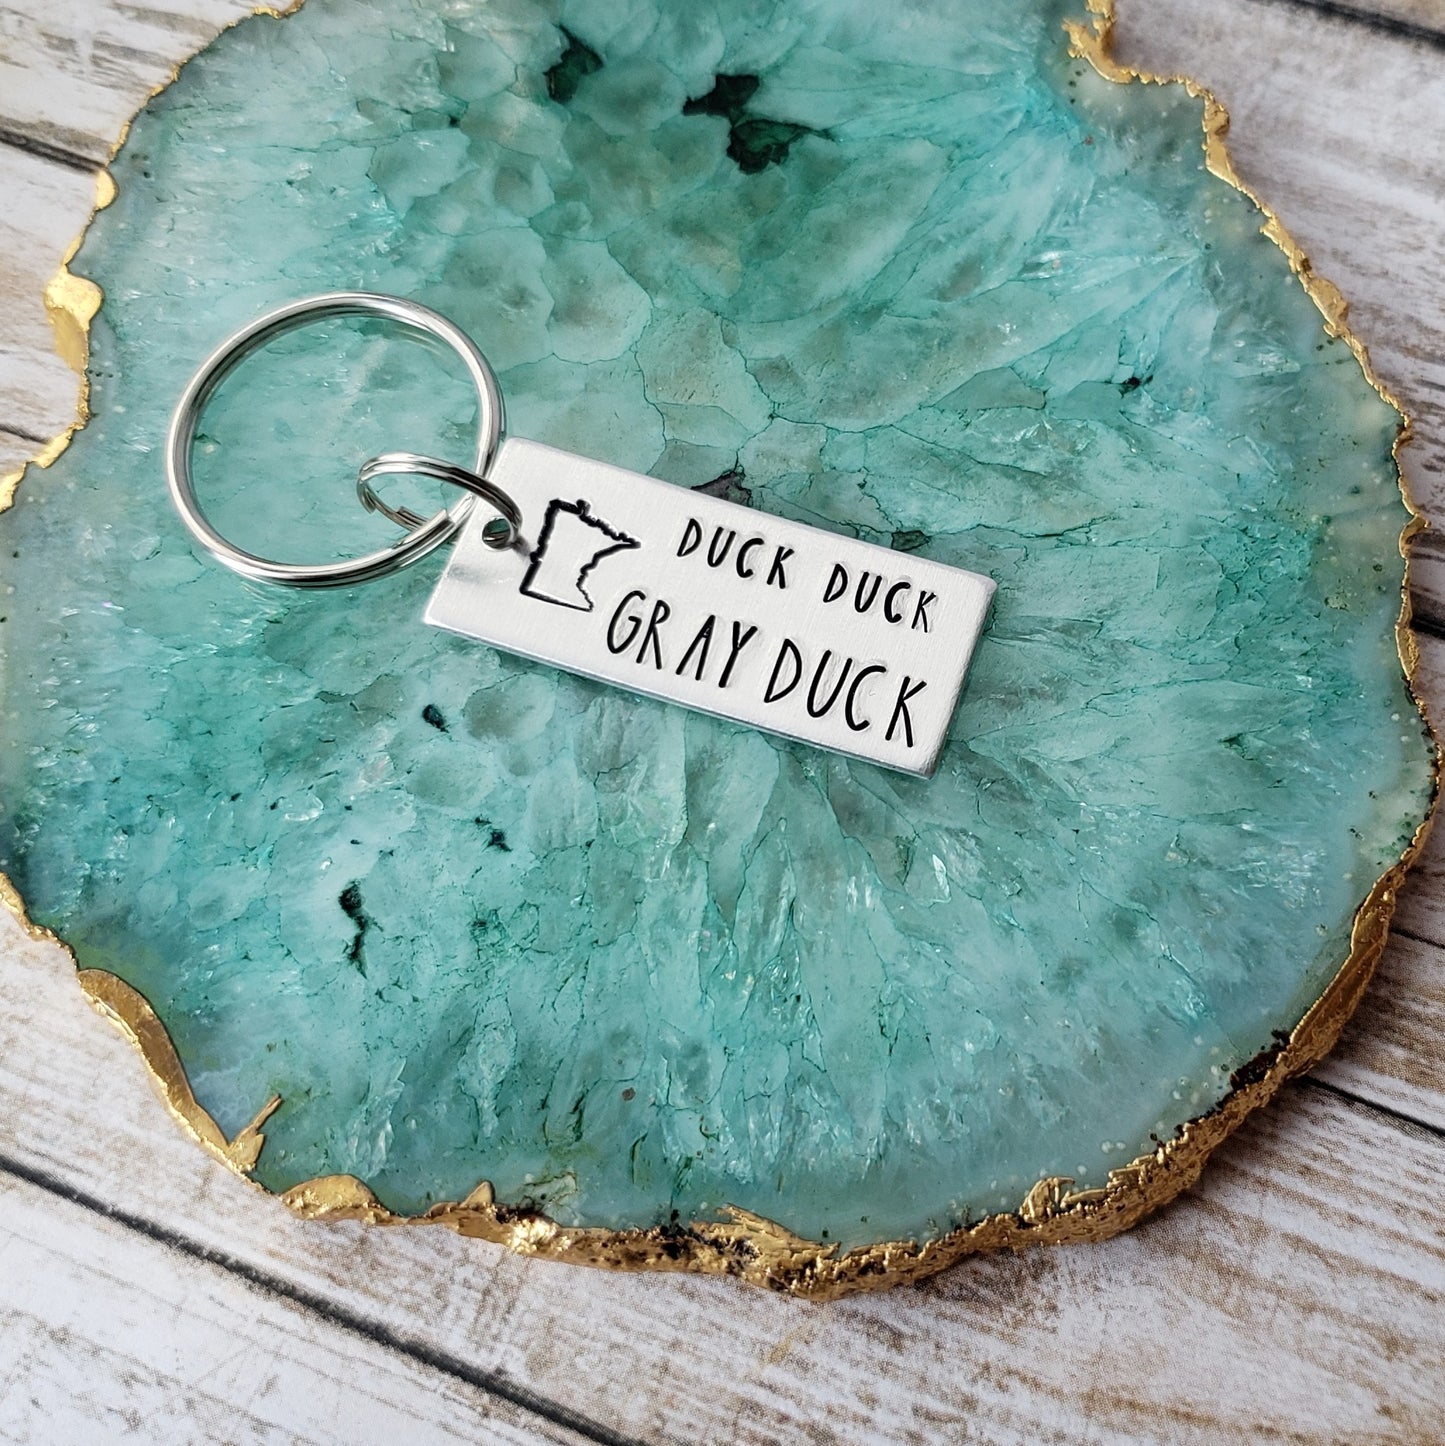 Duck Duck Gray Duck Minnesota Keychain, Funny MN Humor Gifts, Handmade in Minnesota